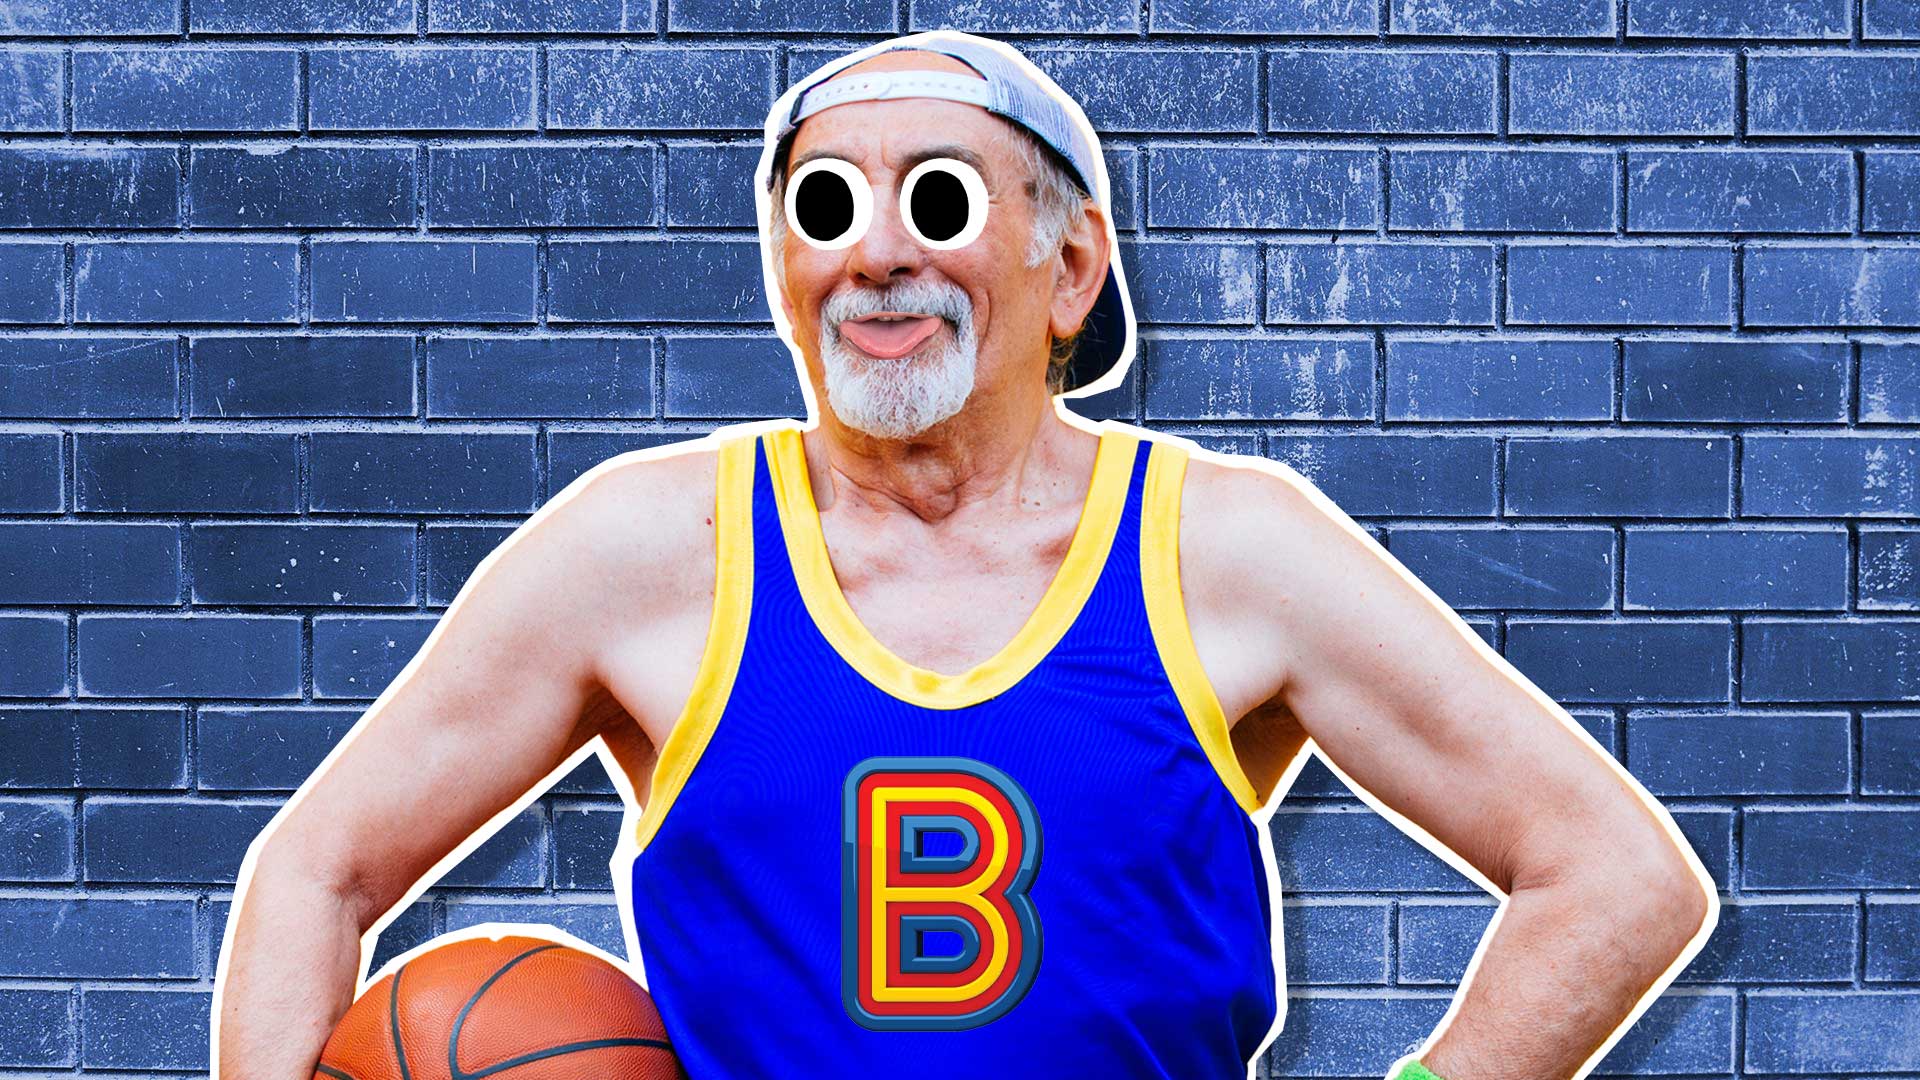 A basketball granddad